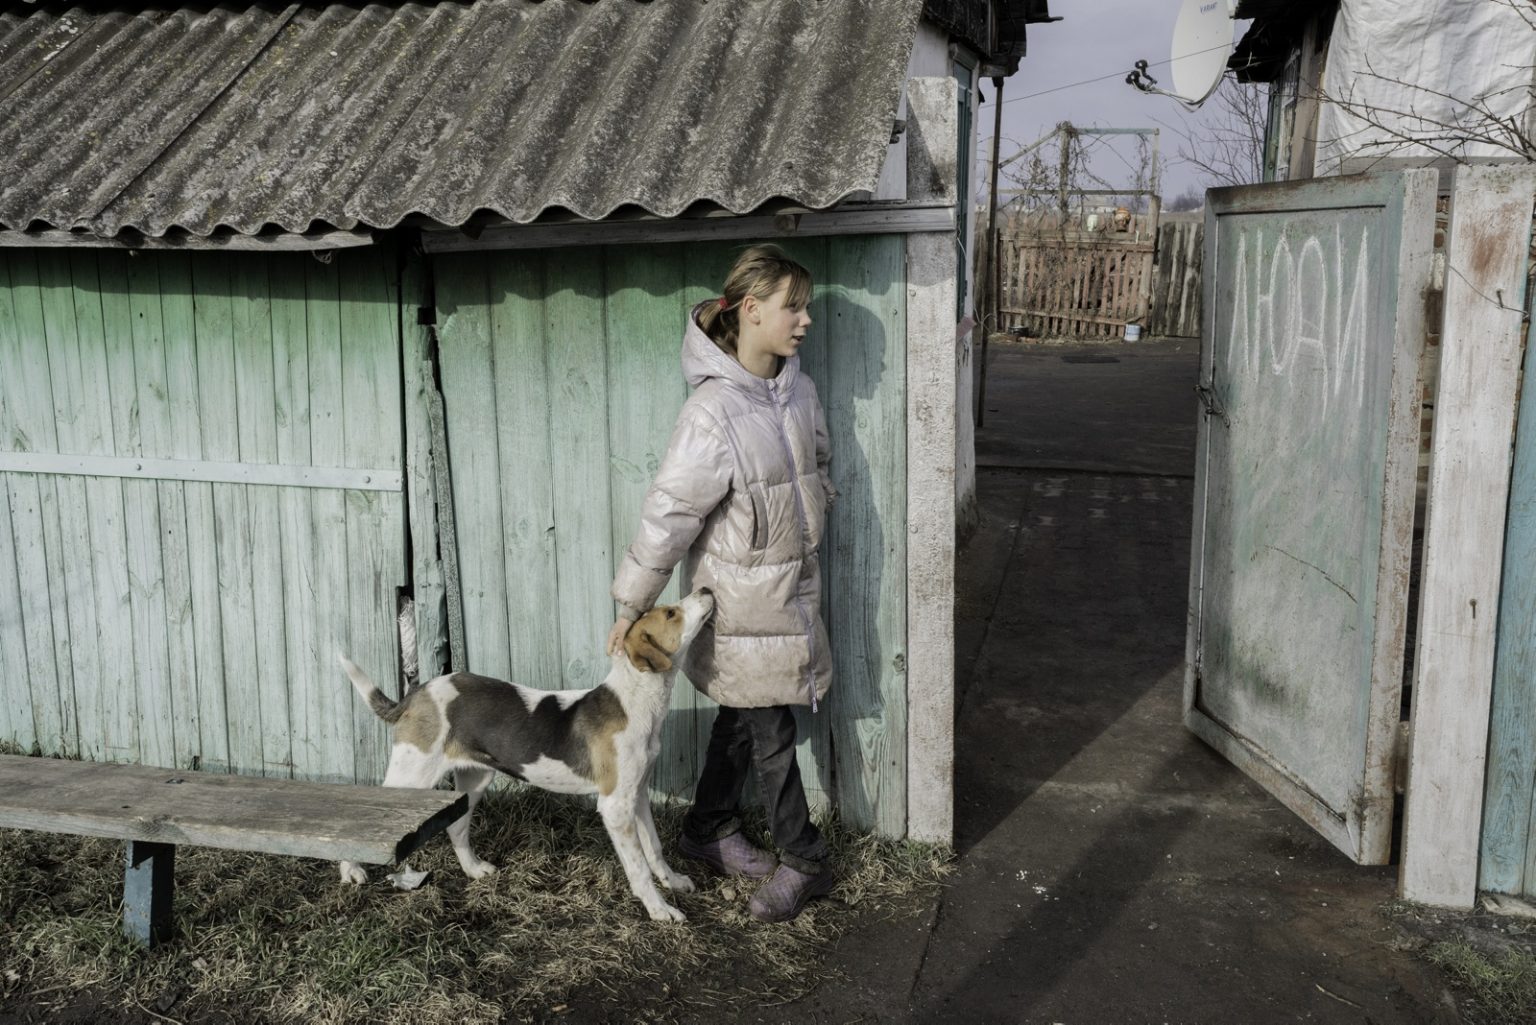 UKRAINE, Zarichne. January 20, 2023 - A 10-year-old Katya stands in front of her house in Zarichne. ><
UCRAINA, Zarichne. 20 gennaio 2023 - Katya, 10 anni, si trova davanti alla sua casa di Zarichne.